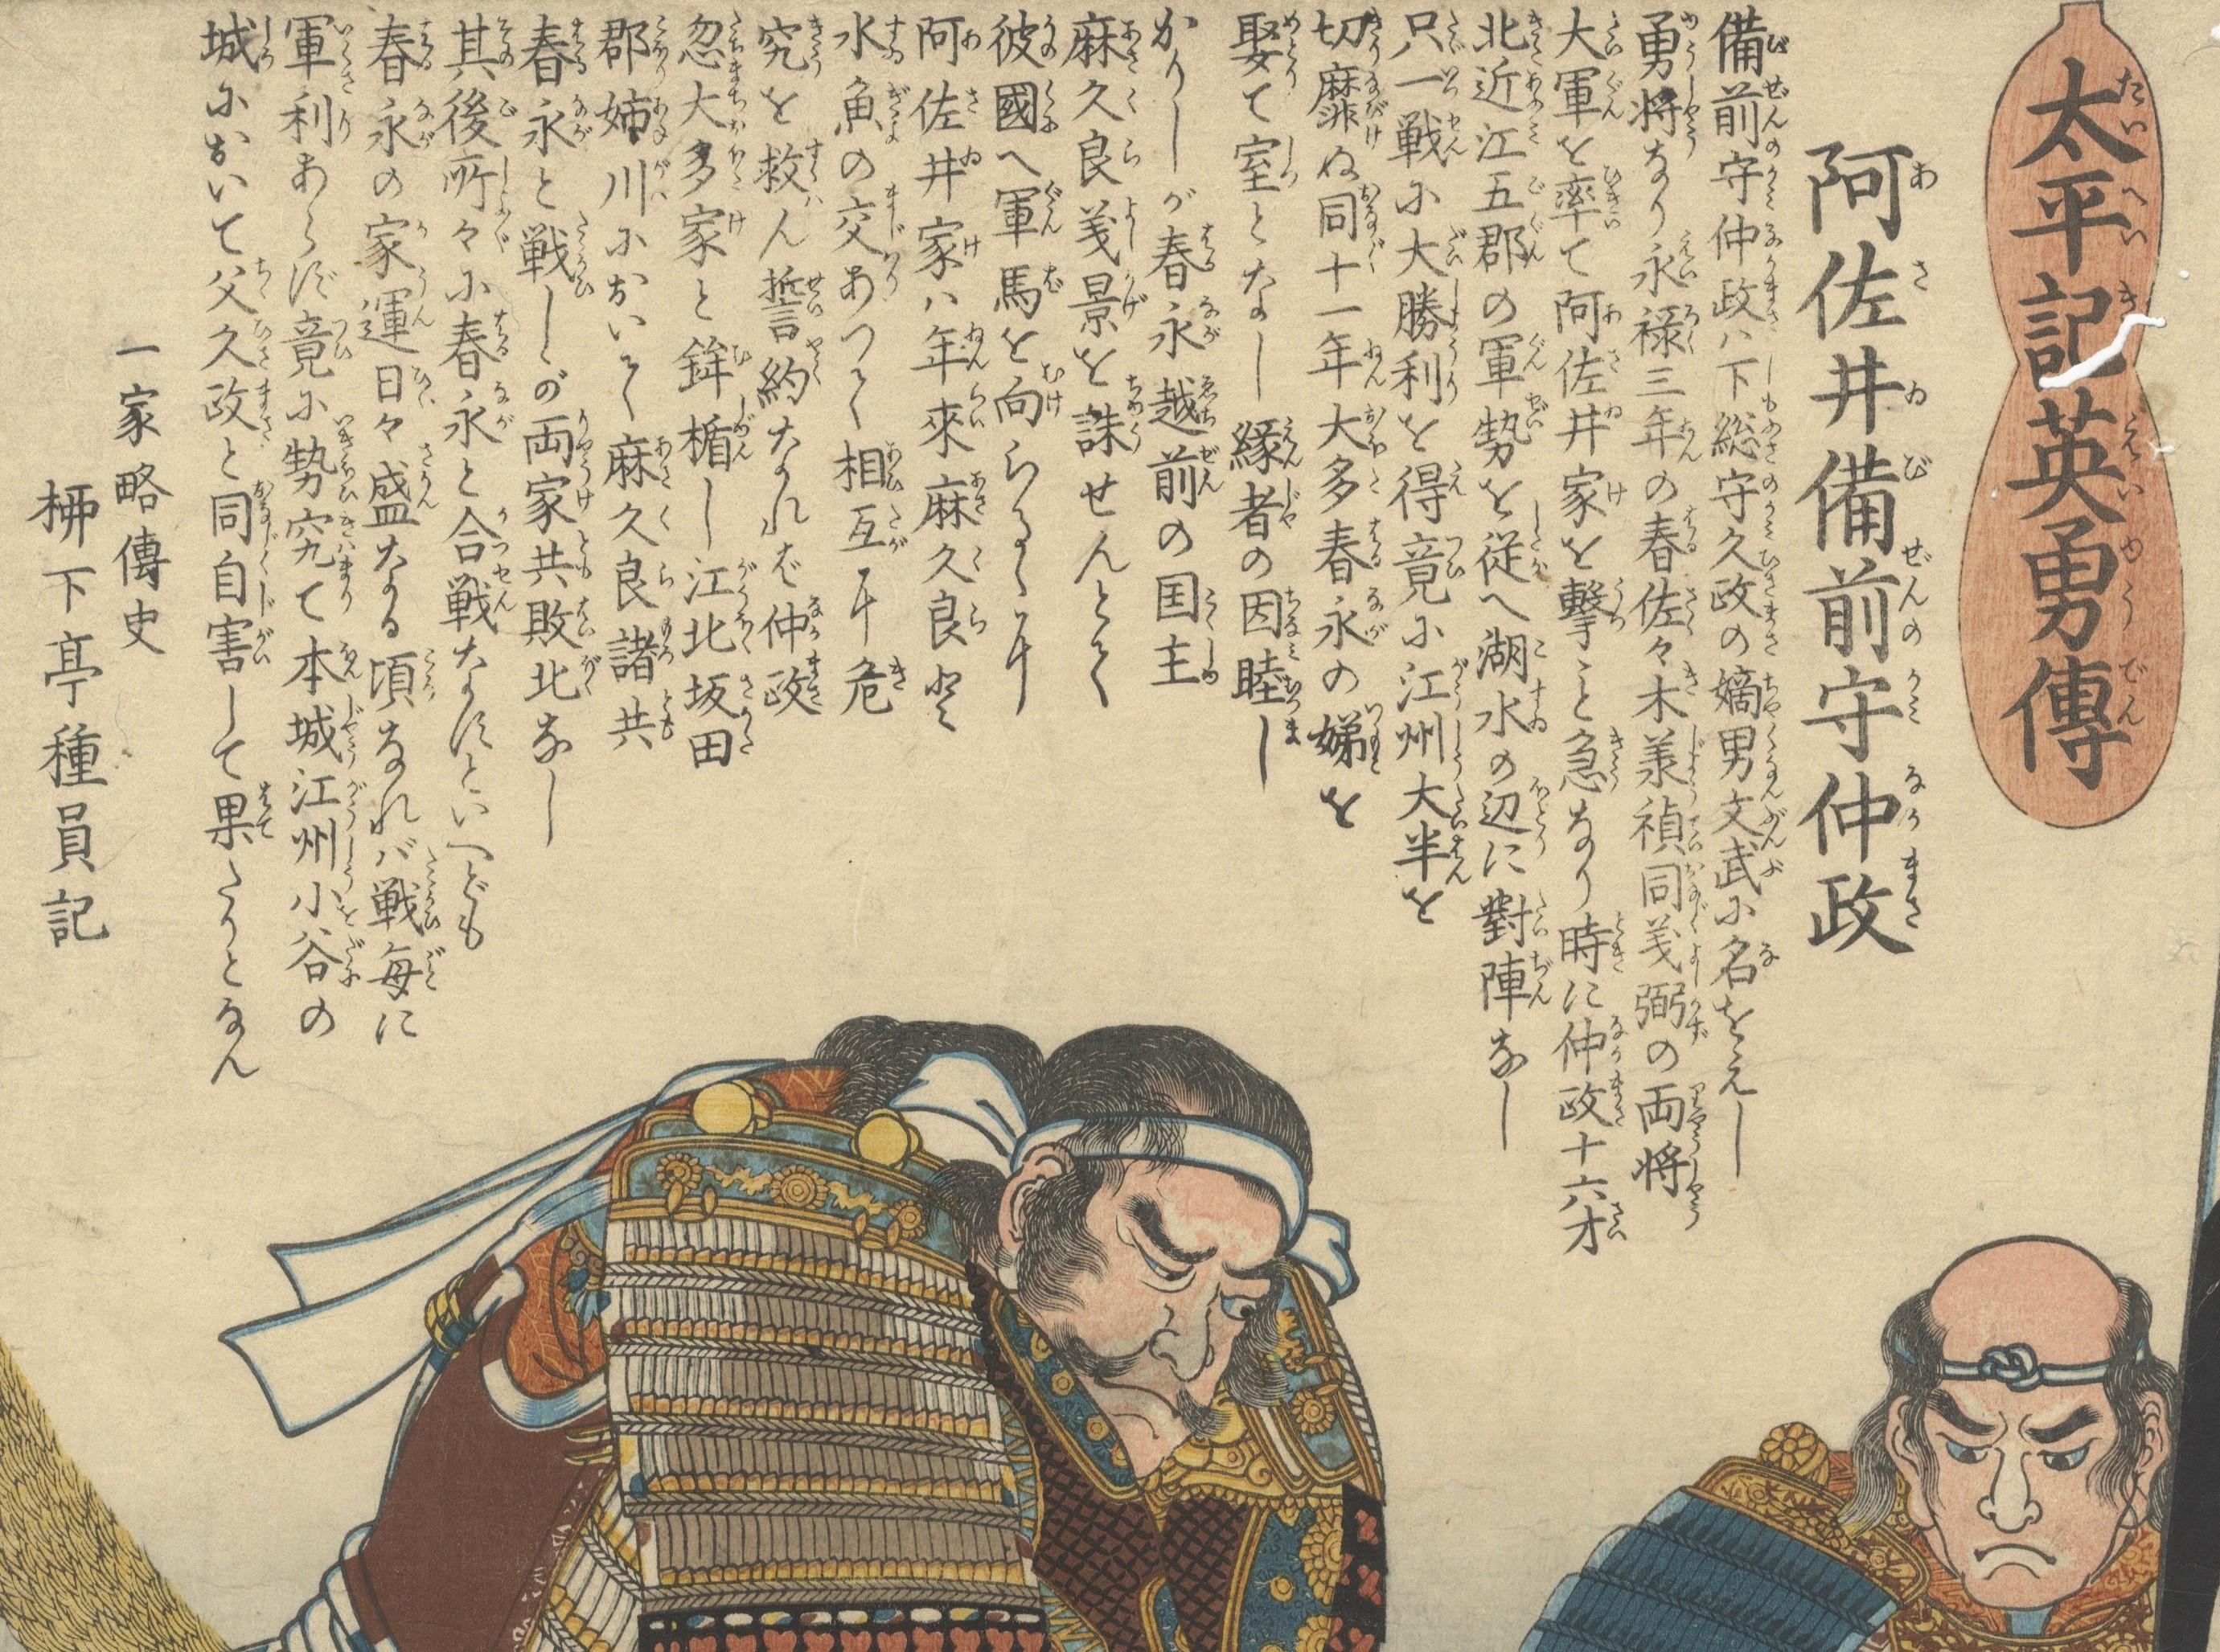 Artist: Kuniyoshi Utagawa (1797-1861)
Title: Asai Bizen-no kami Nakamasa
Series: Heroes of the Grand Pacification
Publisher: Yamamoto-ya Heikichi
Date: c. 1848 - 1849
Size: 24.7 x 34.8 cm
Condition: Darkened edges and spots throughout the print.